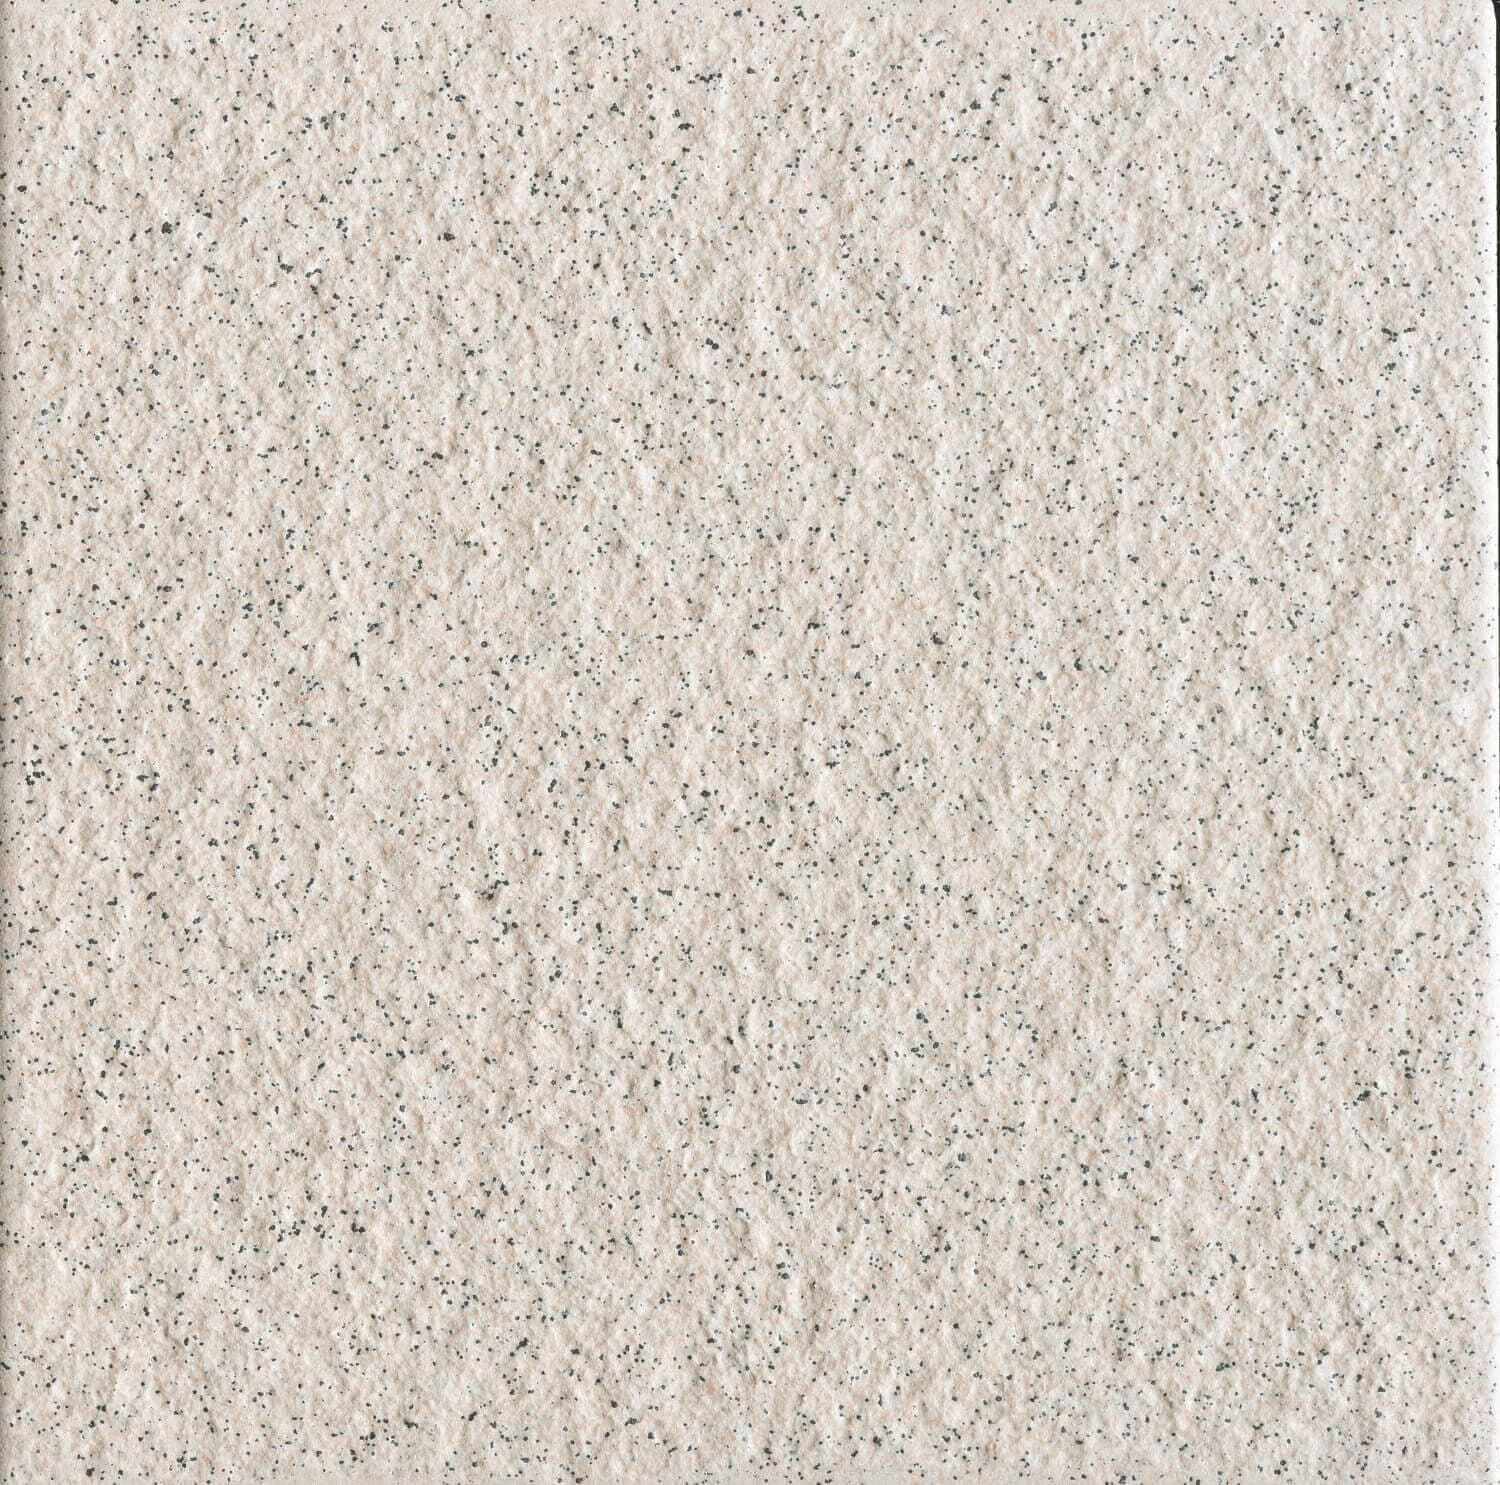 Dorset Woolliscroft Luna Quartz Slip Resistant Quarry Tile 148x148mm